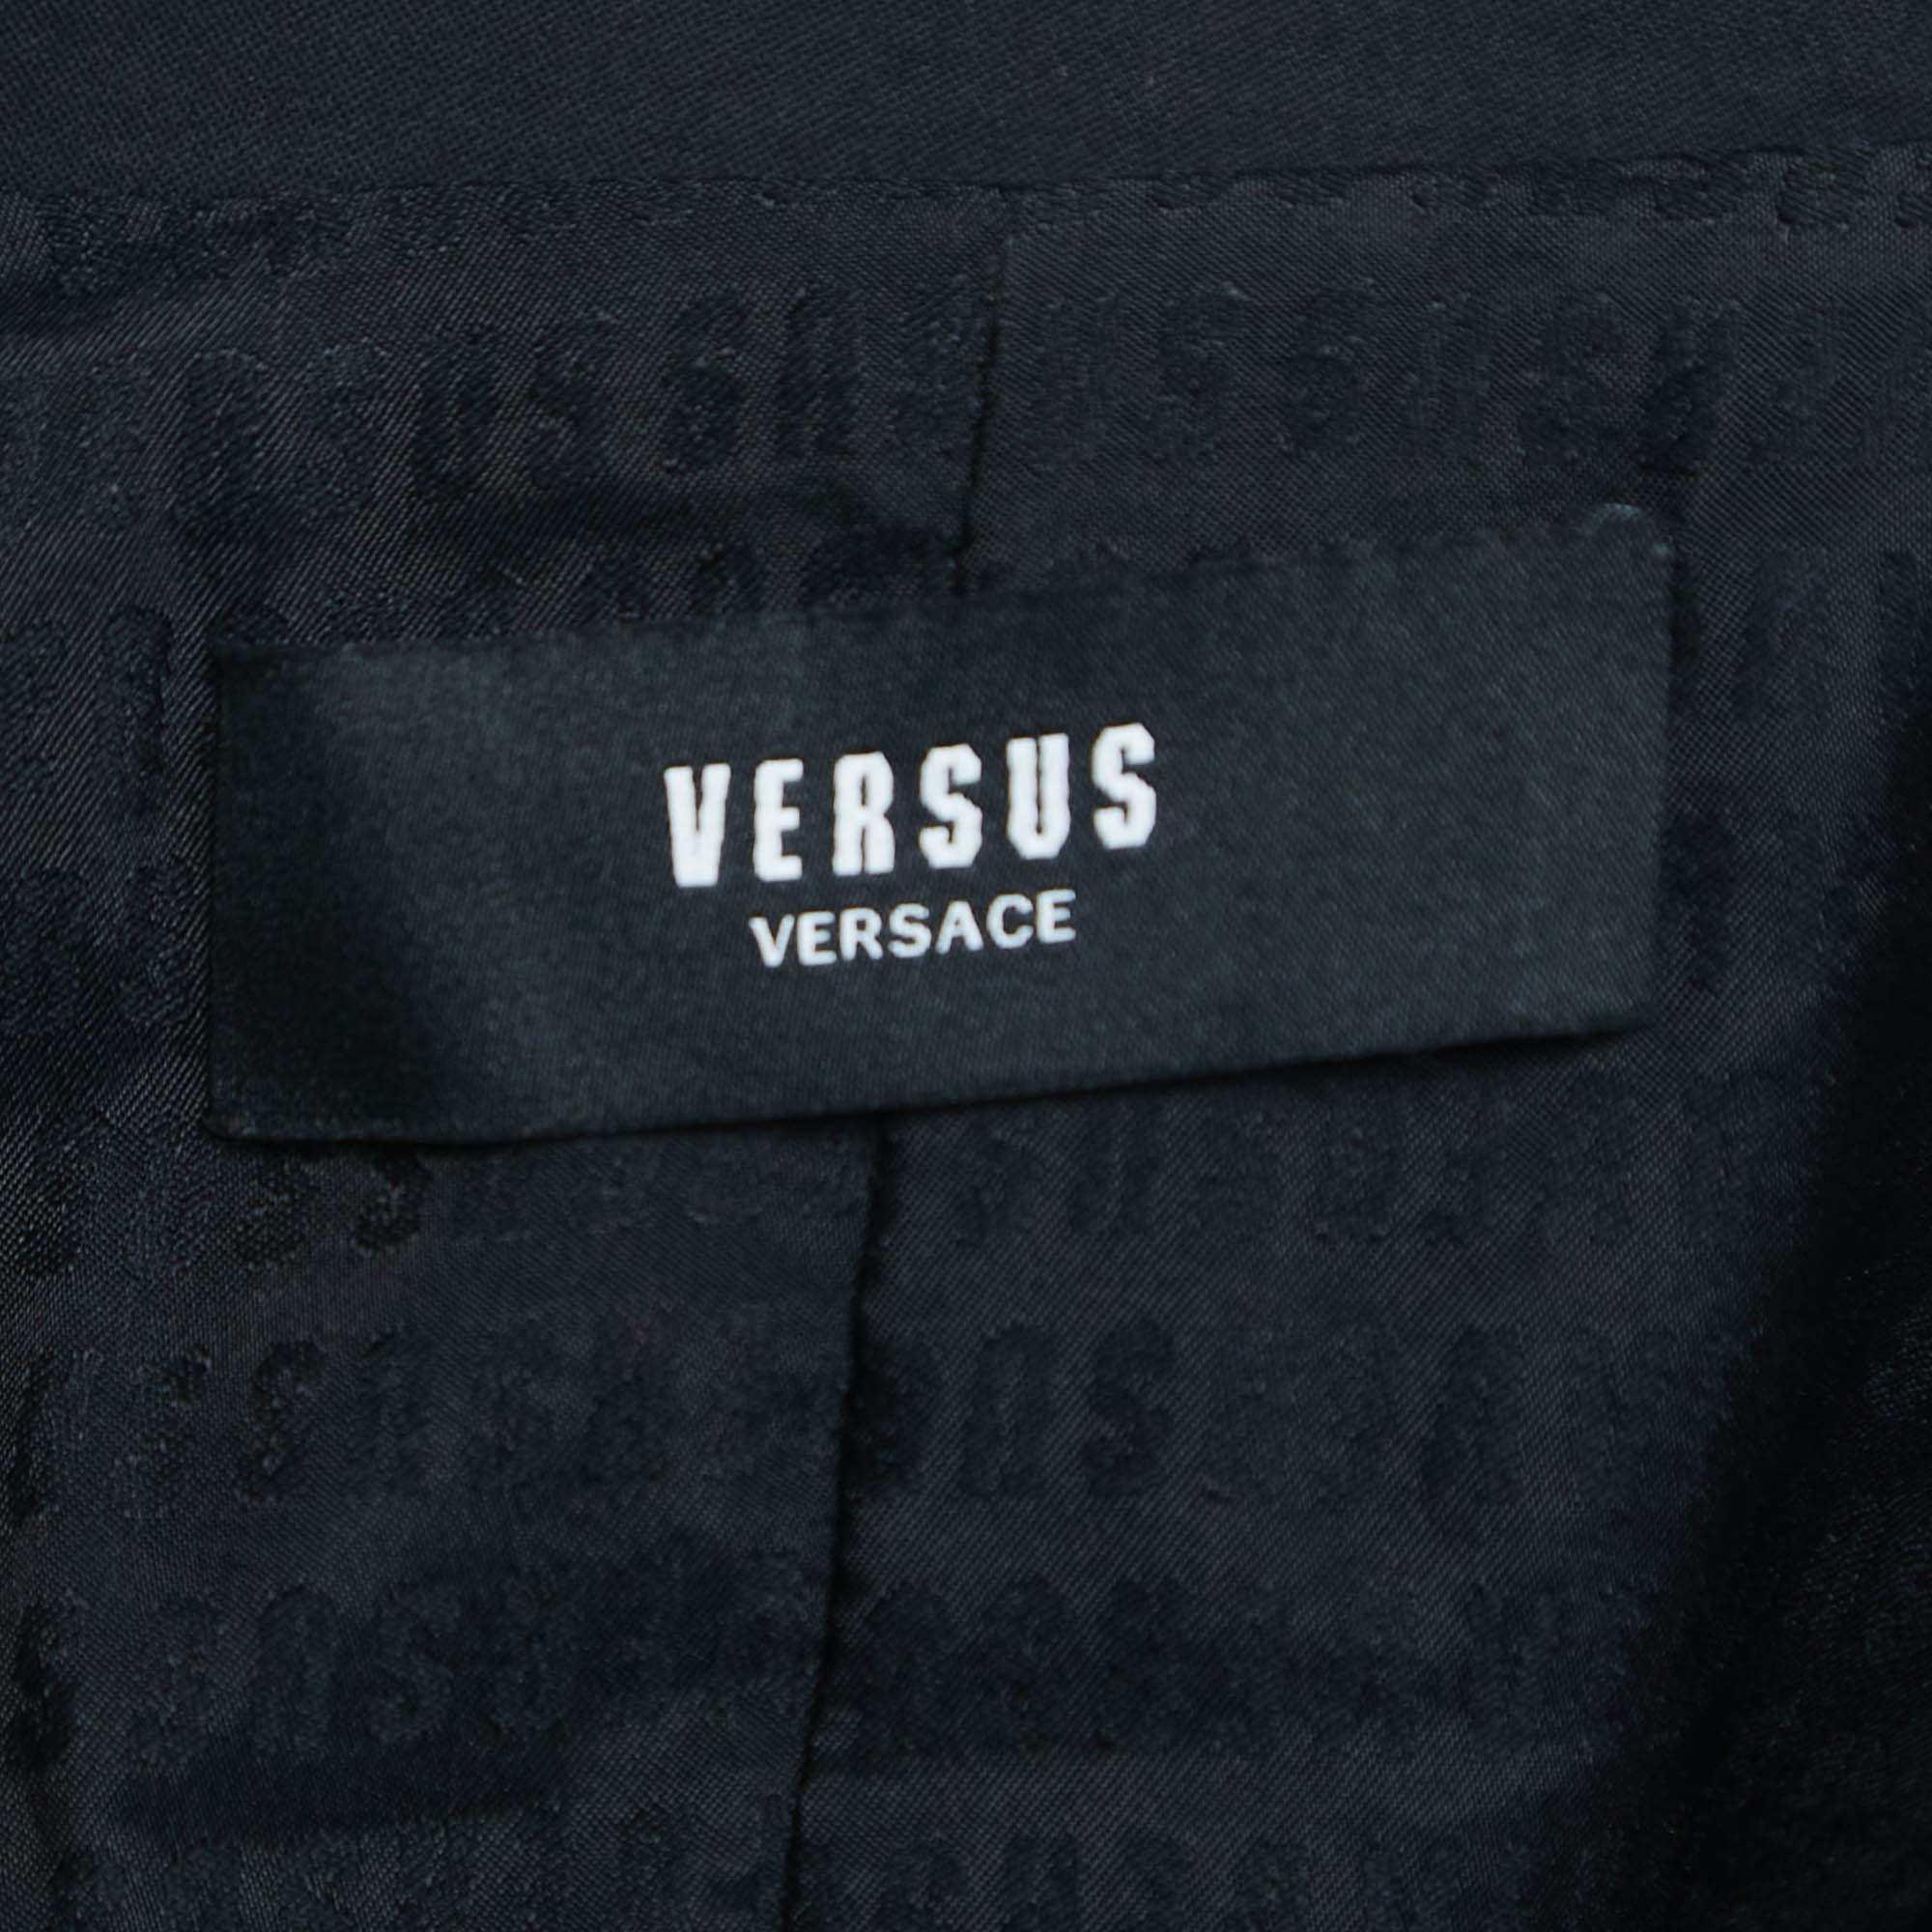 Versus Versace Black Stretch Cotton Trench Coat S